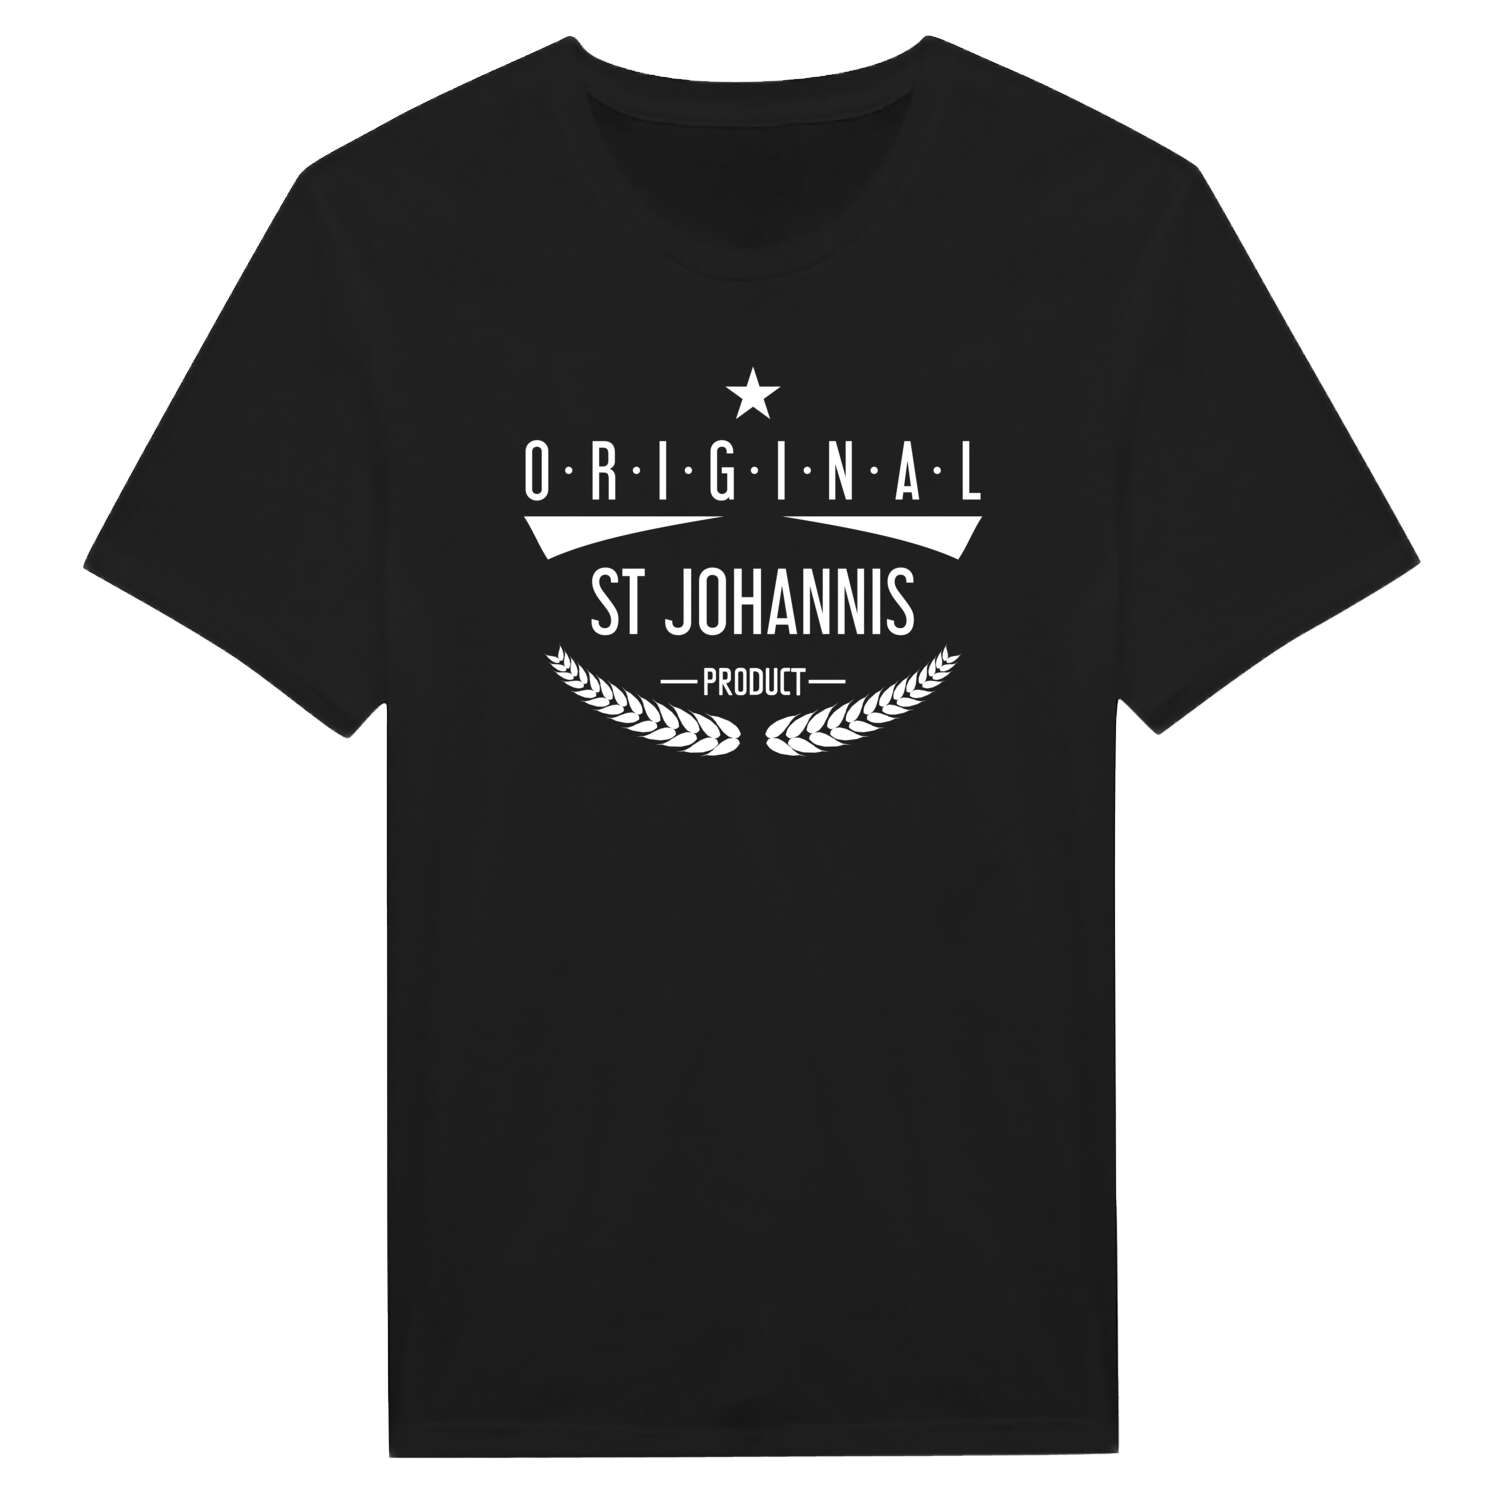 St Johannis T-Shirt »Original Product«